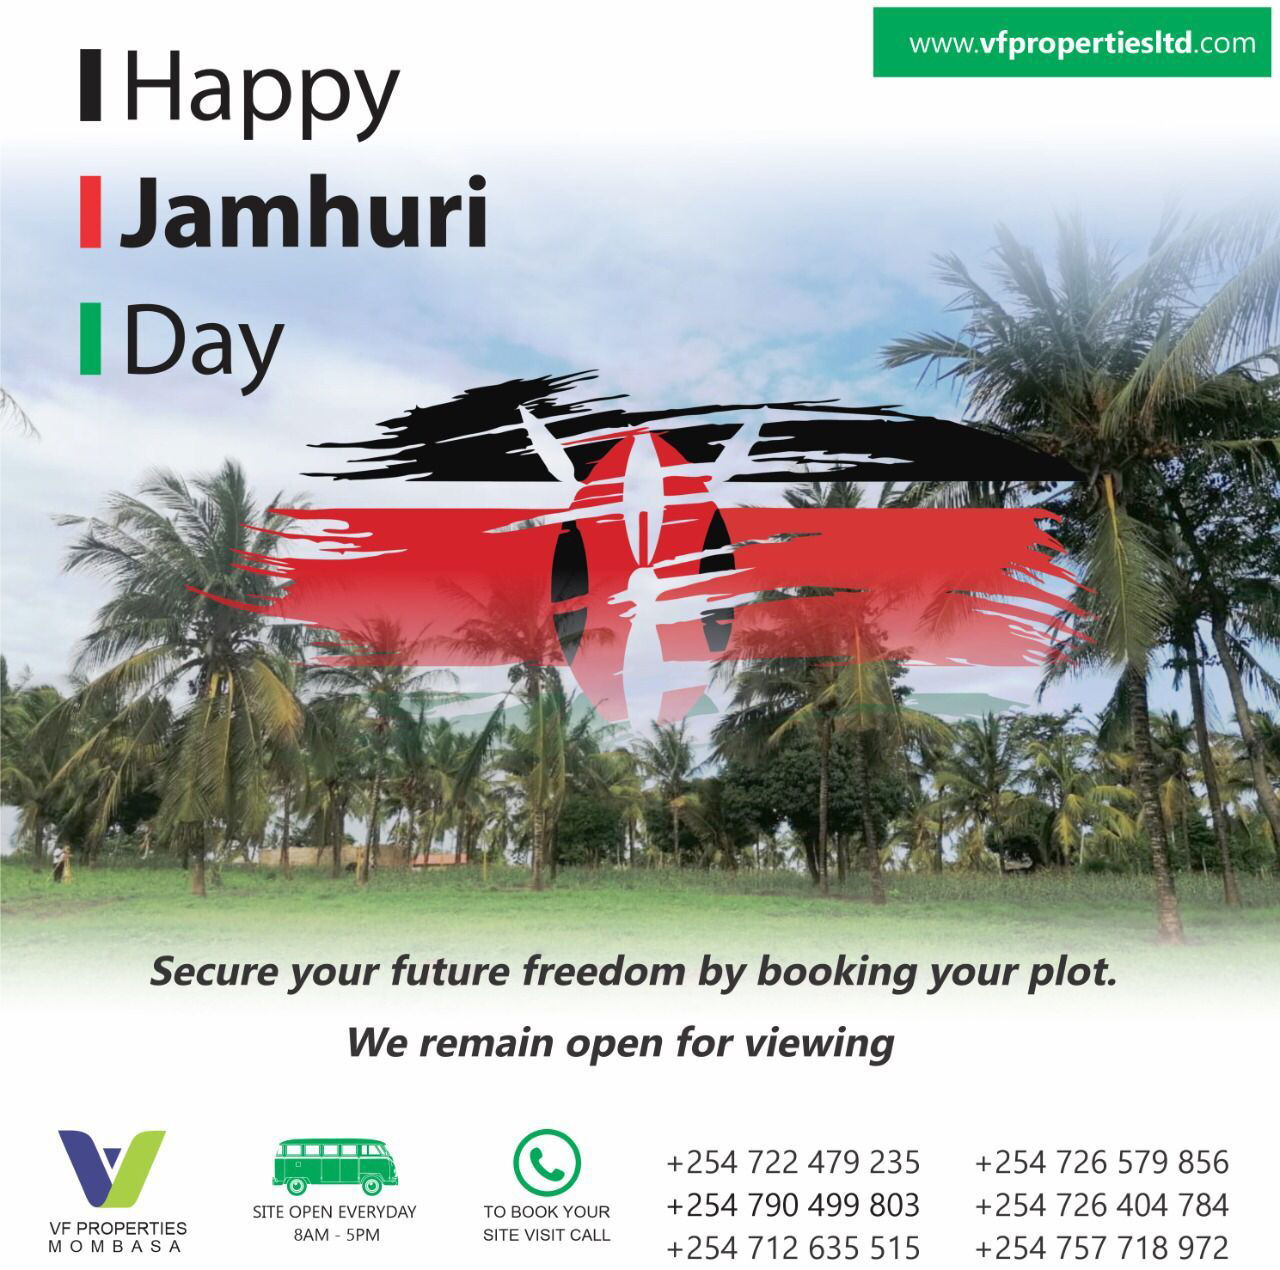 Happy Jamhuri Day